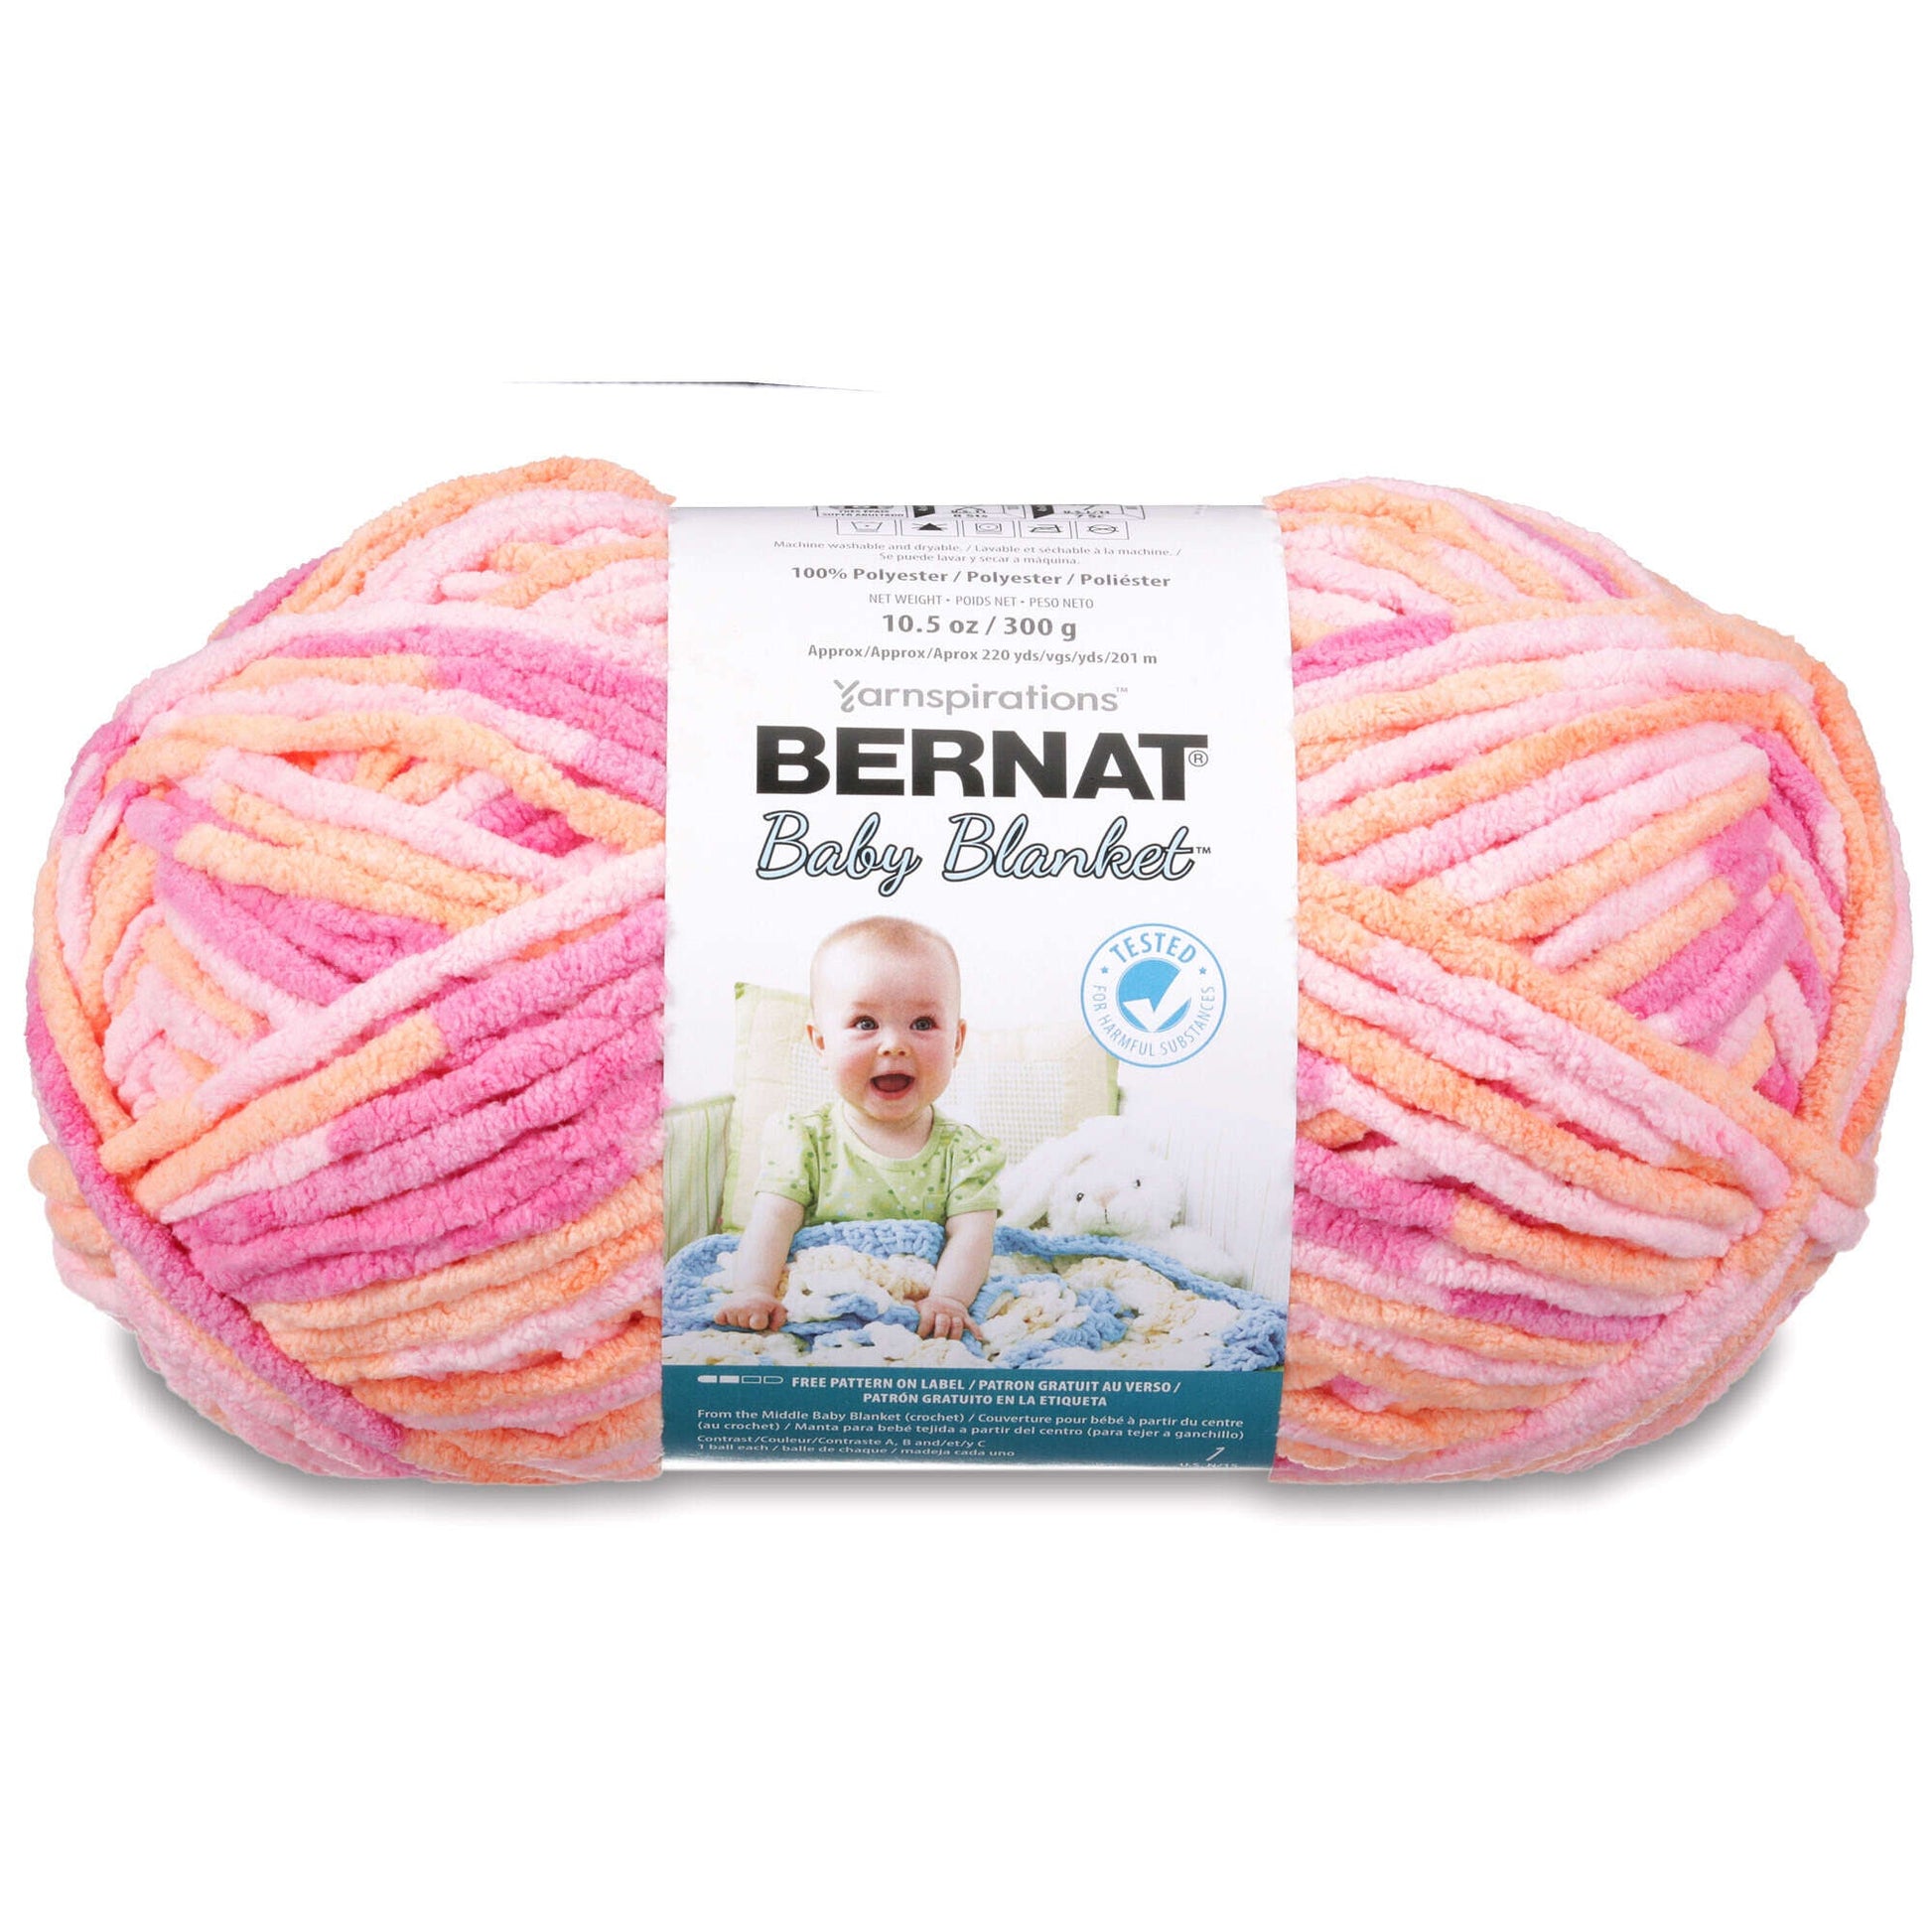 Bernat Bundle Up Yarn 100% Polyester, 8.8 oz (Multicolor Choice) New!